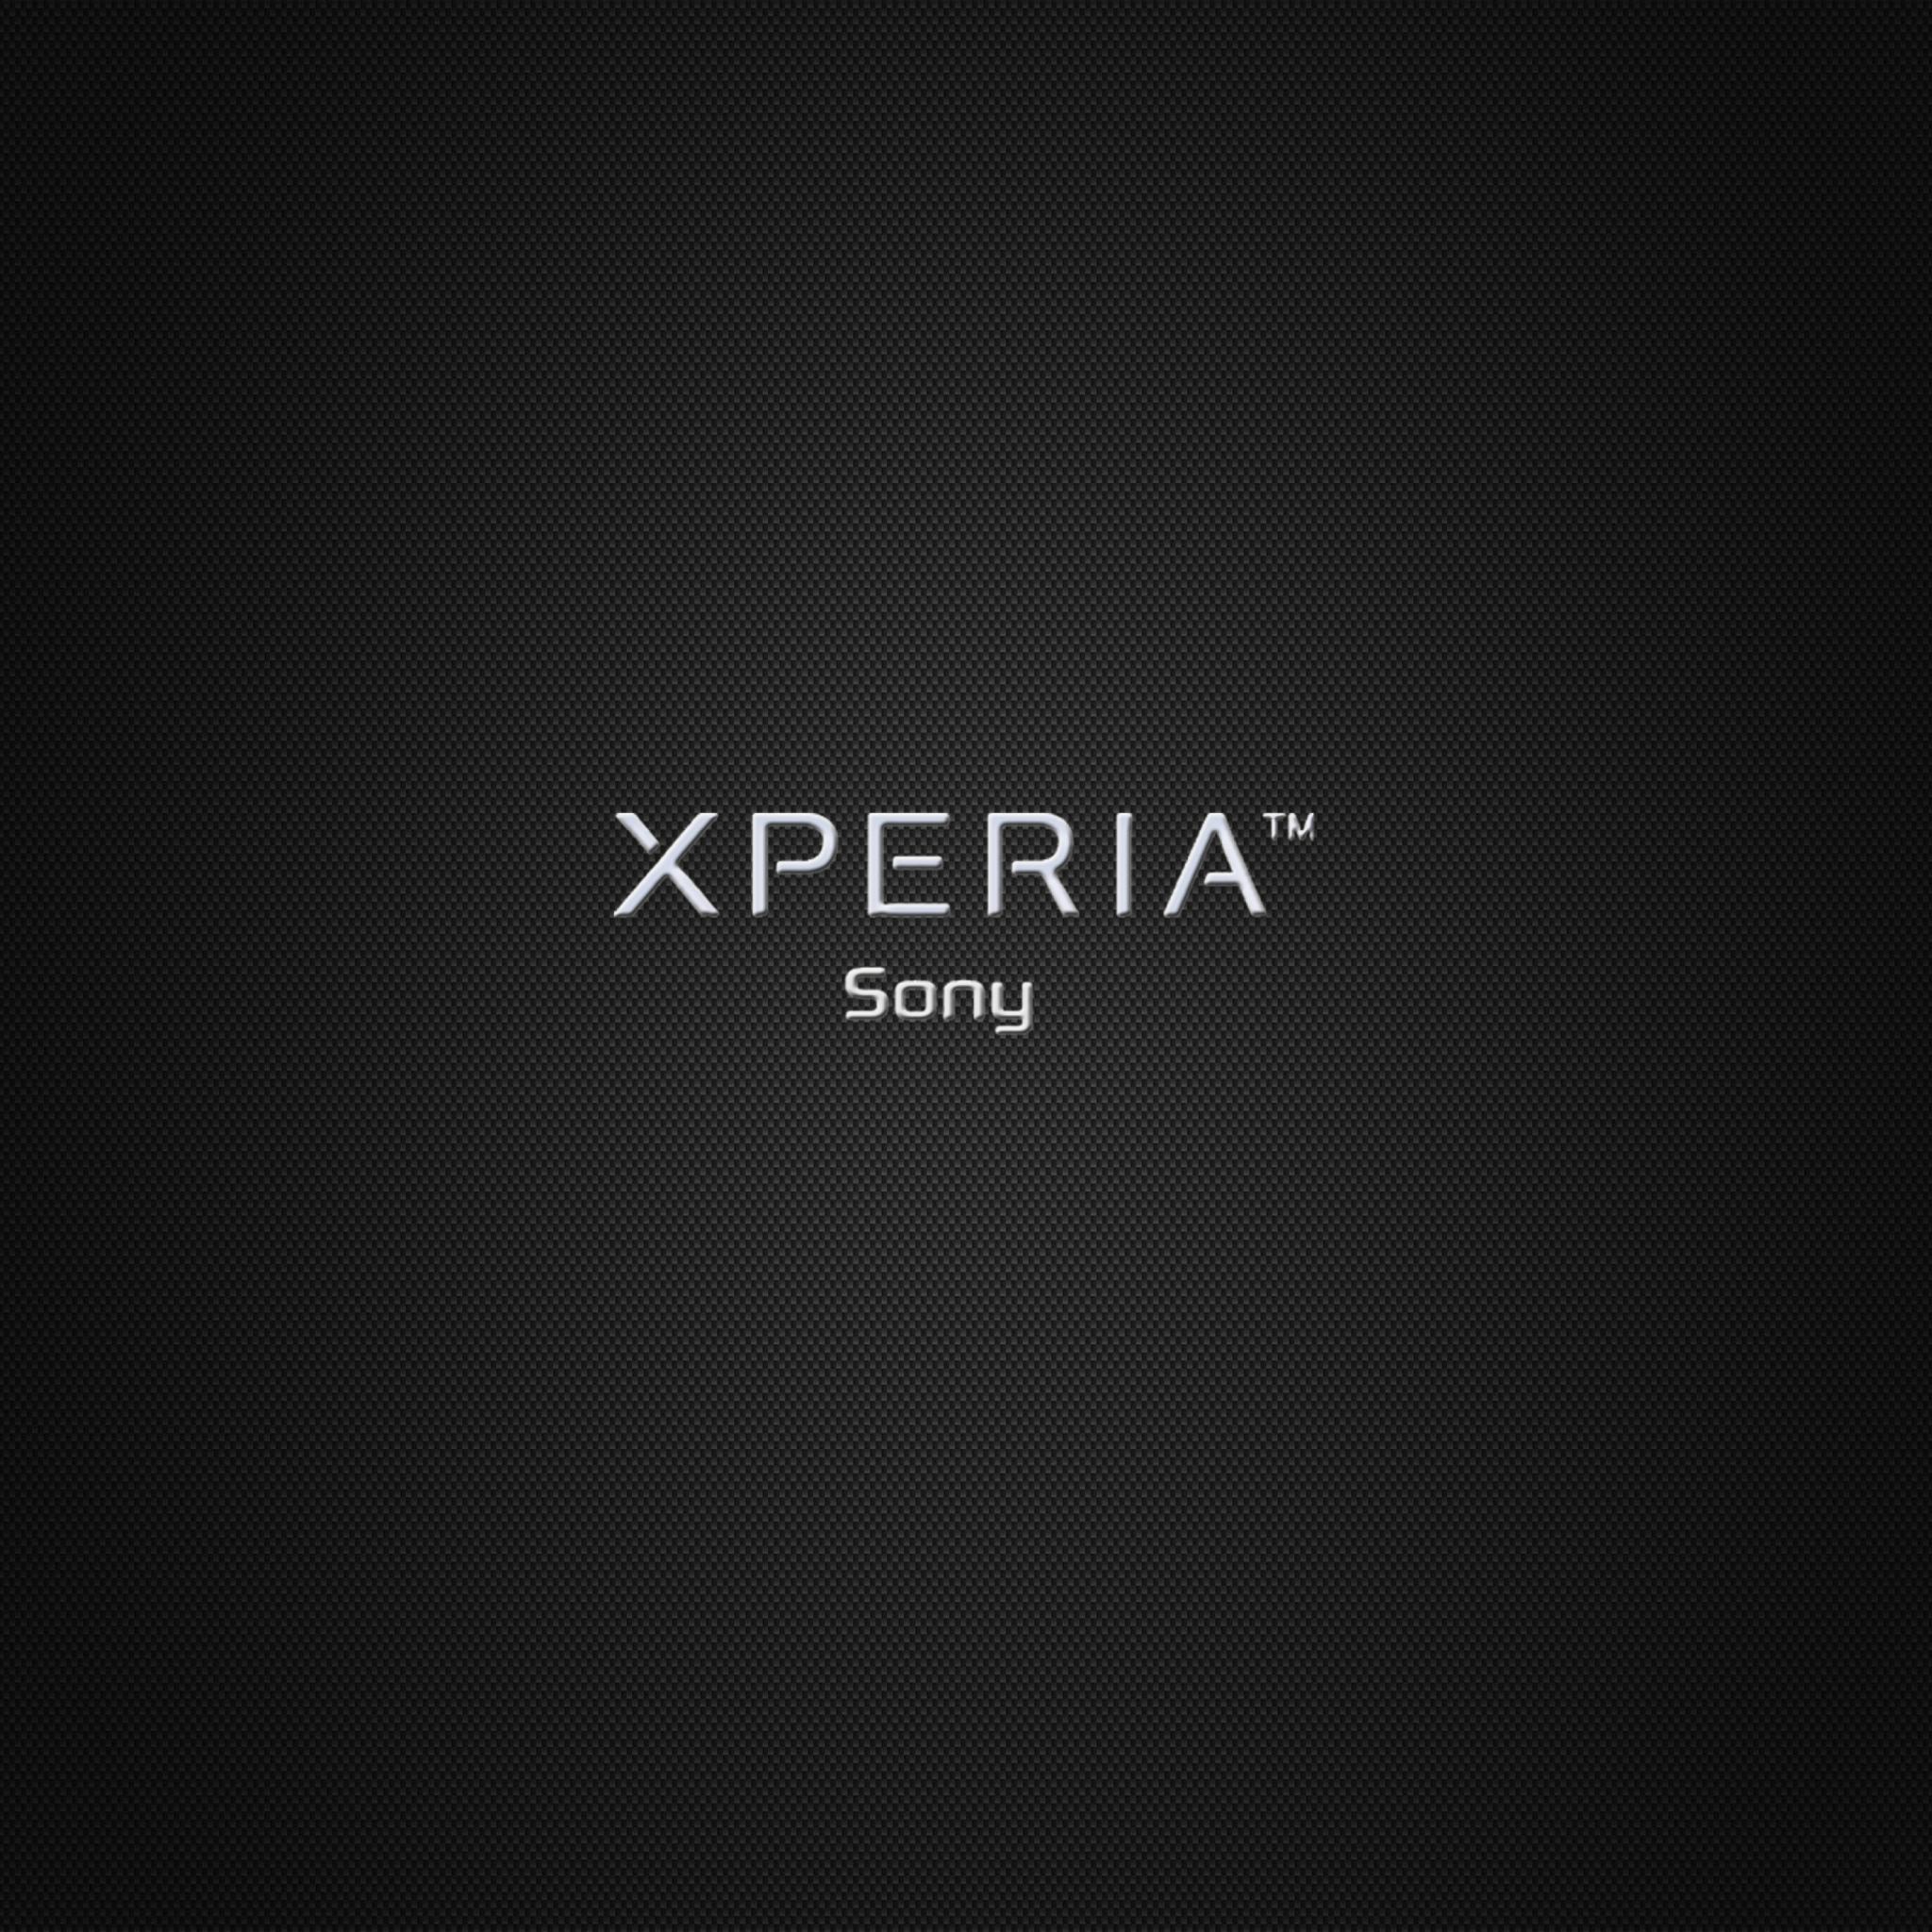 Sony Xperia wallpaper 2048x2048